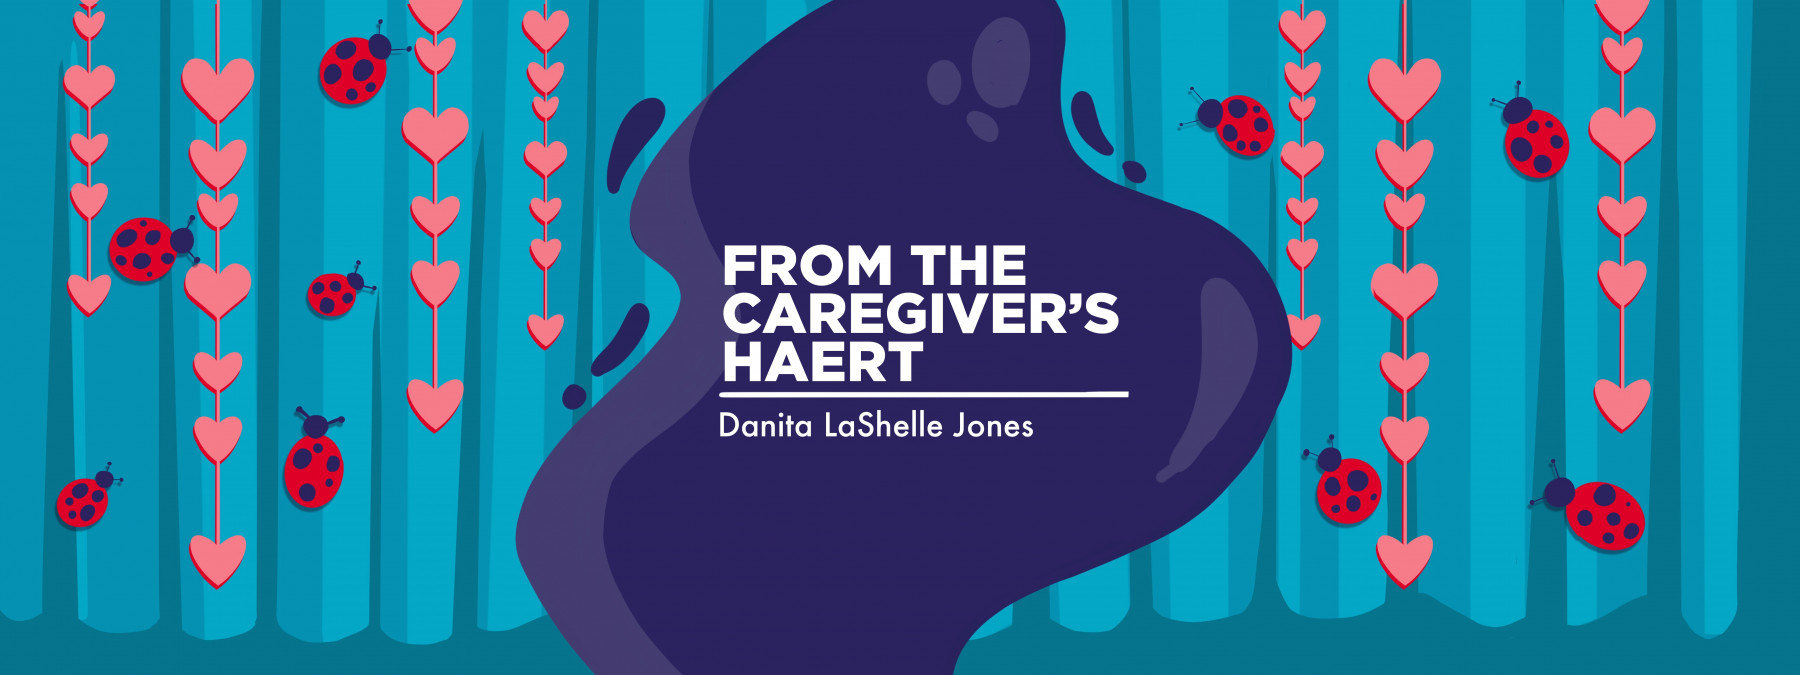 caregiver self care | Angioedema News | banner image for Danita LaShelle Jones' column, 